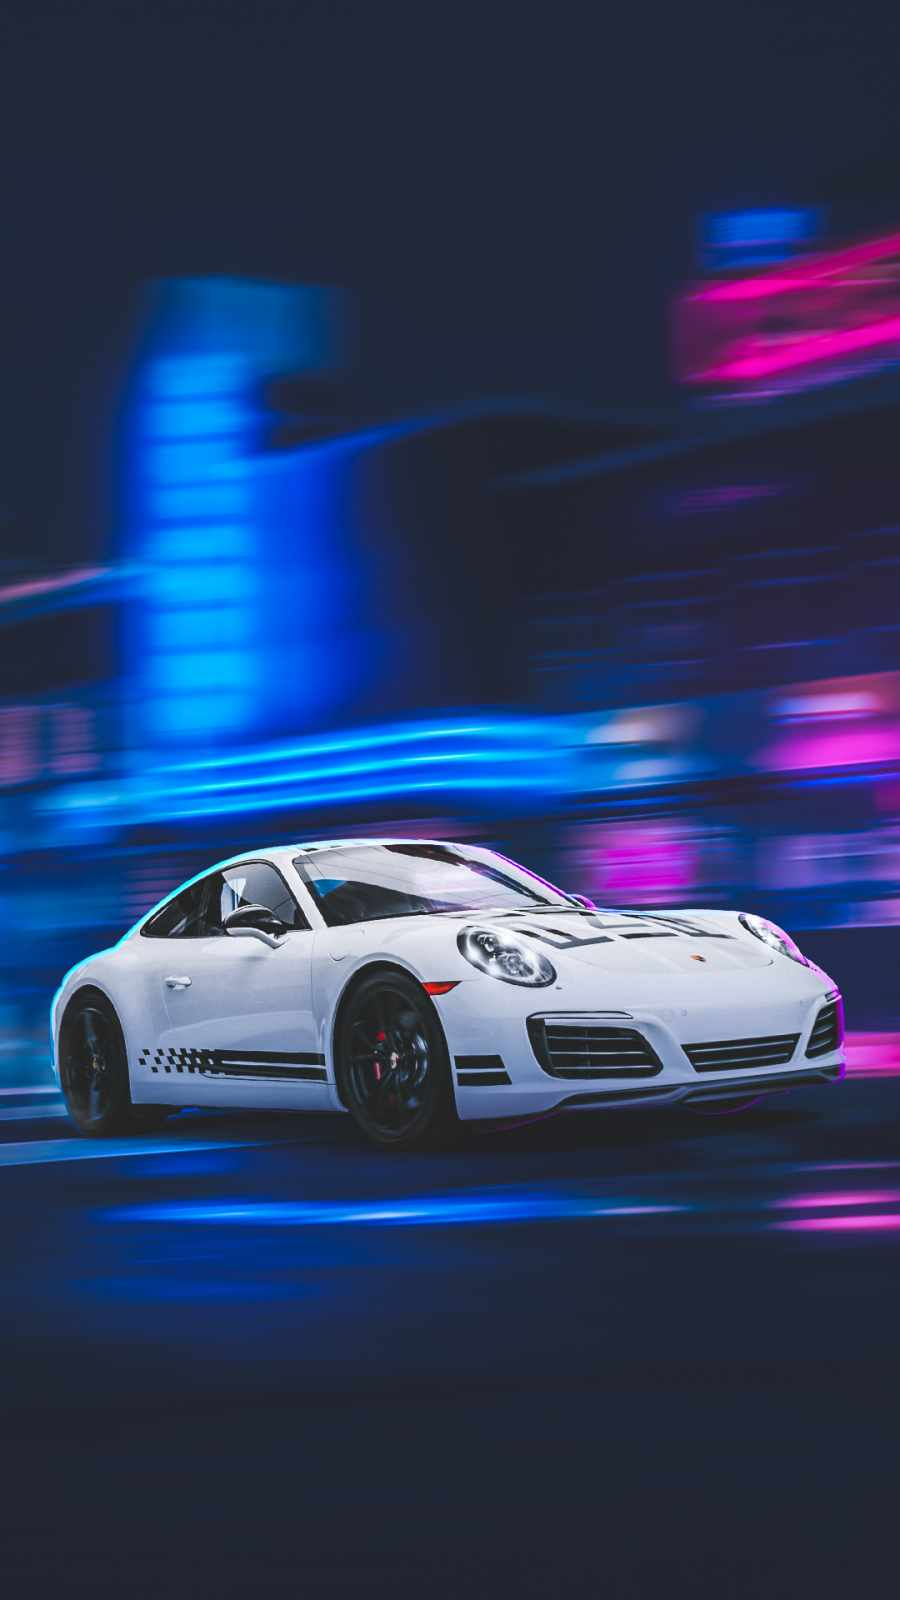 Porsche Night Ride HD IPhone Wallpaper  IPhone Wallpapers